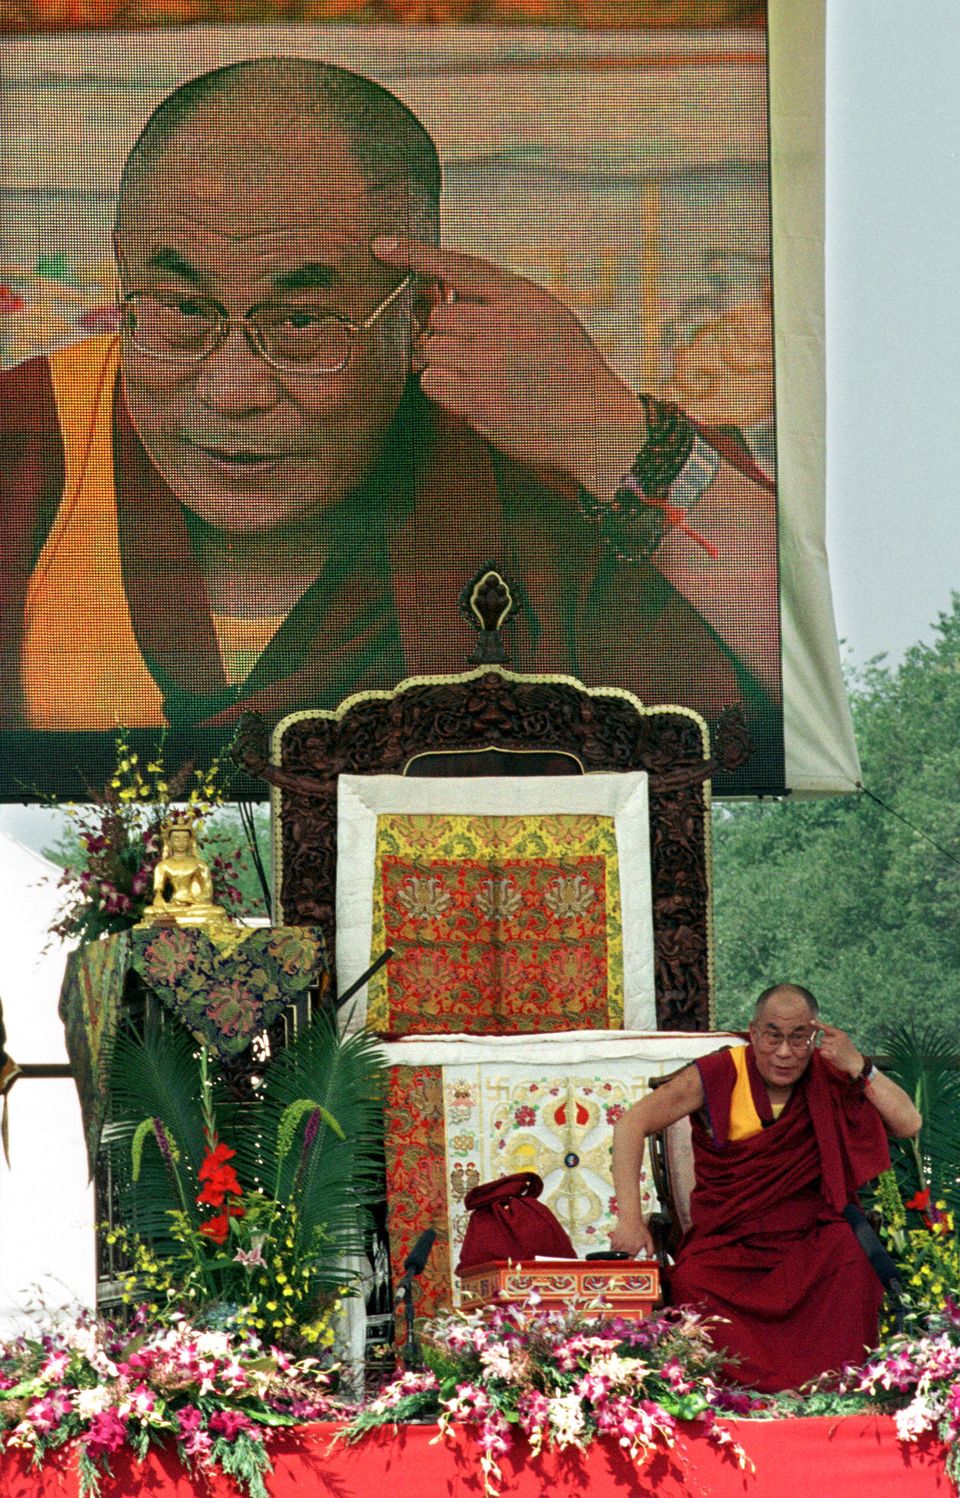 The Dalai Lama speaks during the Smithsonian Folklife Festival